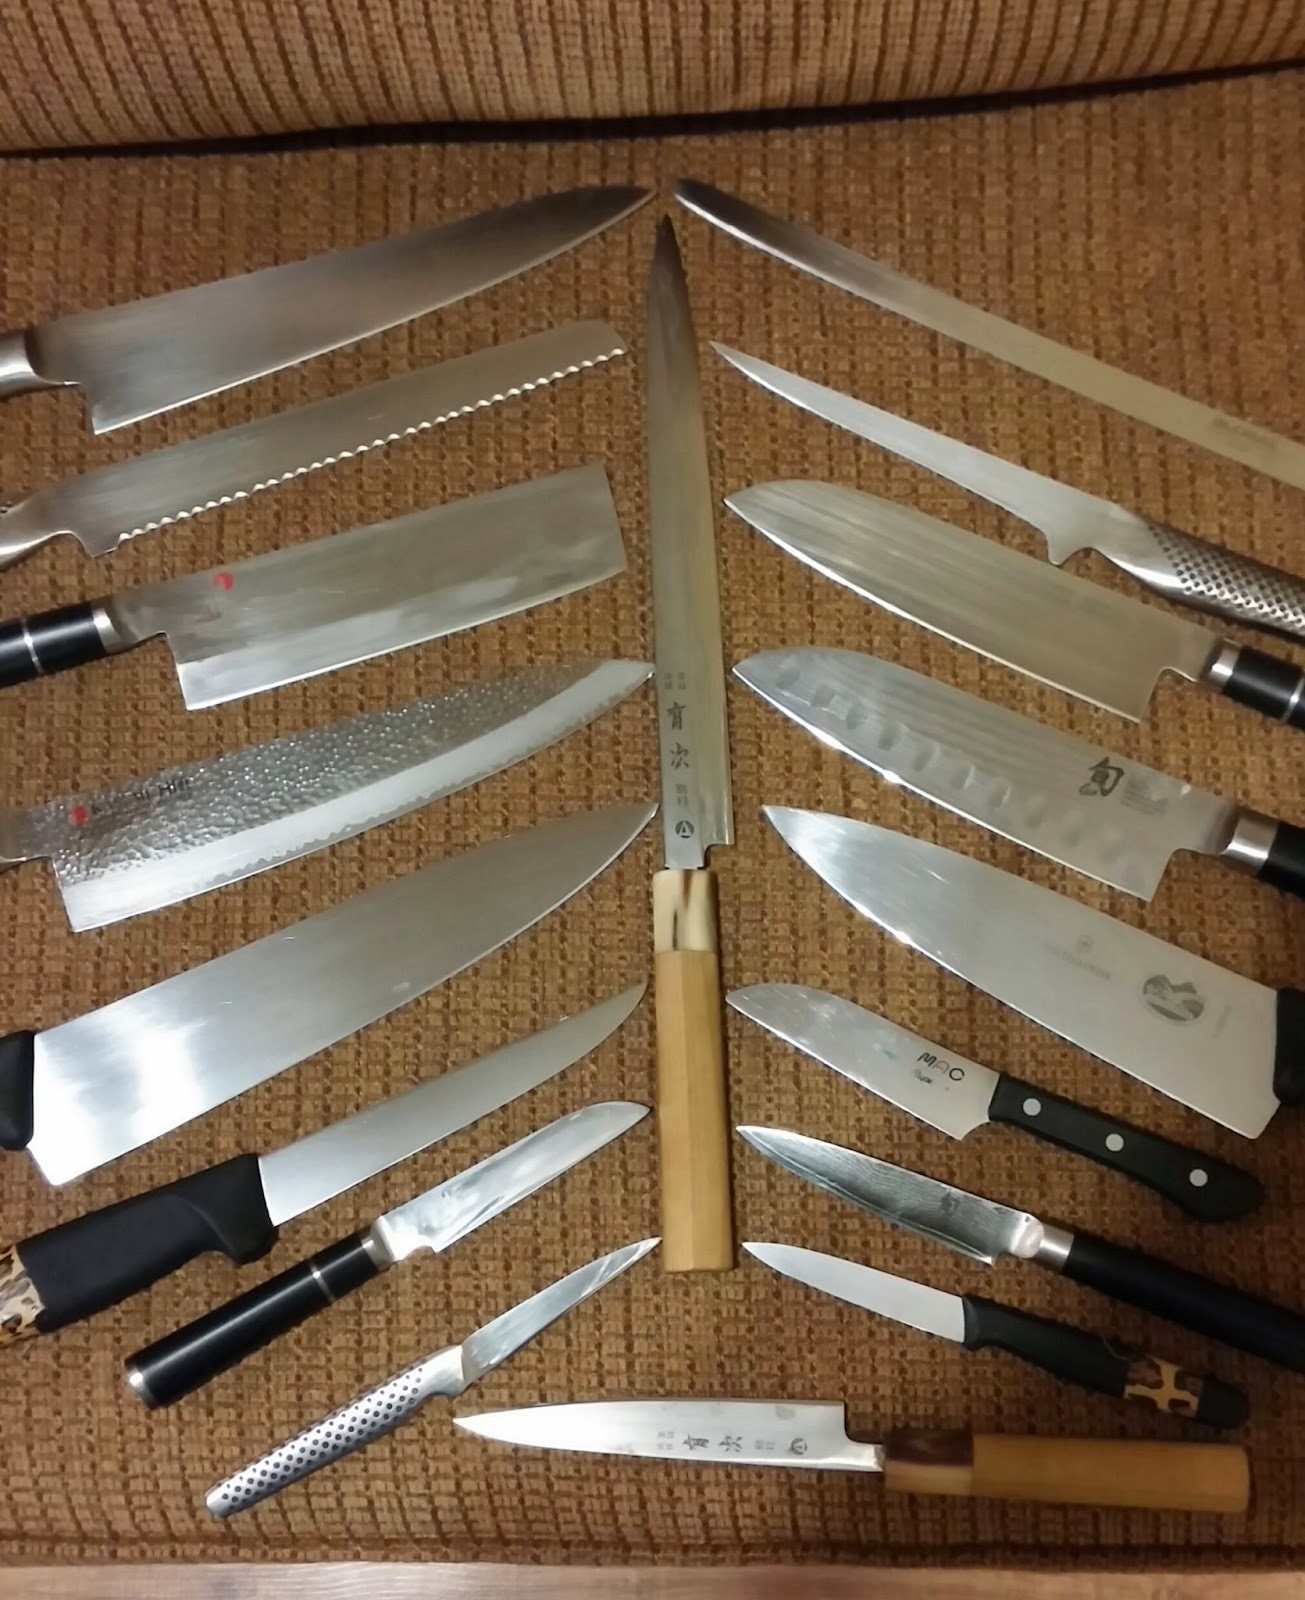 The Ultimate Knife Sharpening Guide - Neighbor Blog